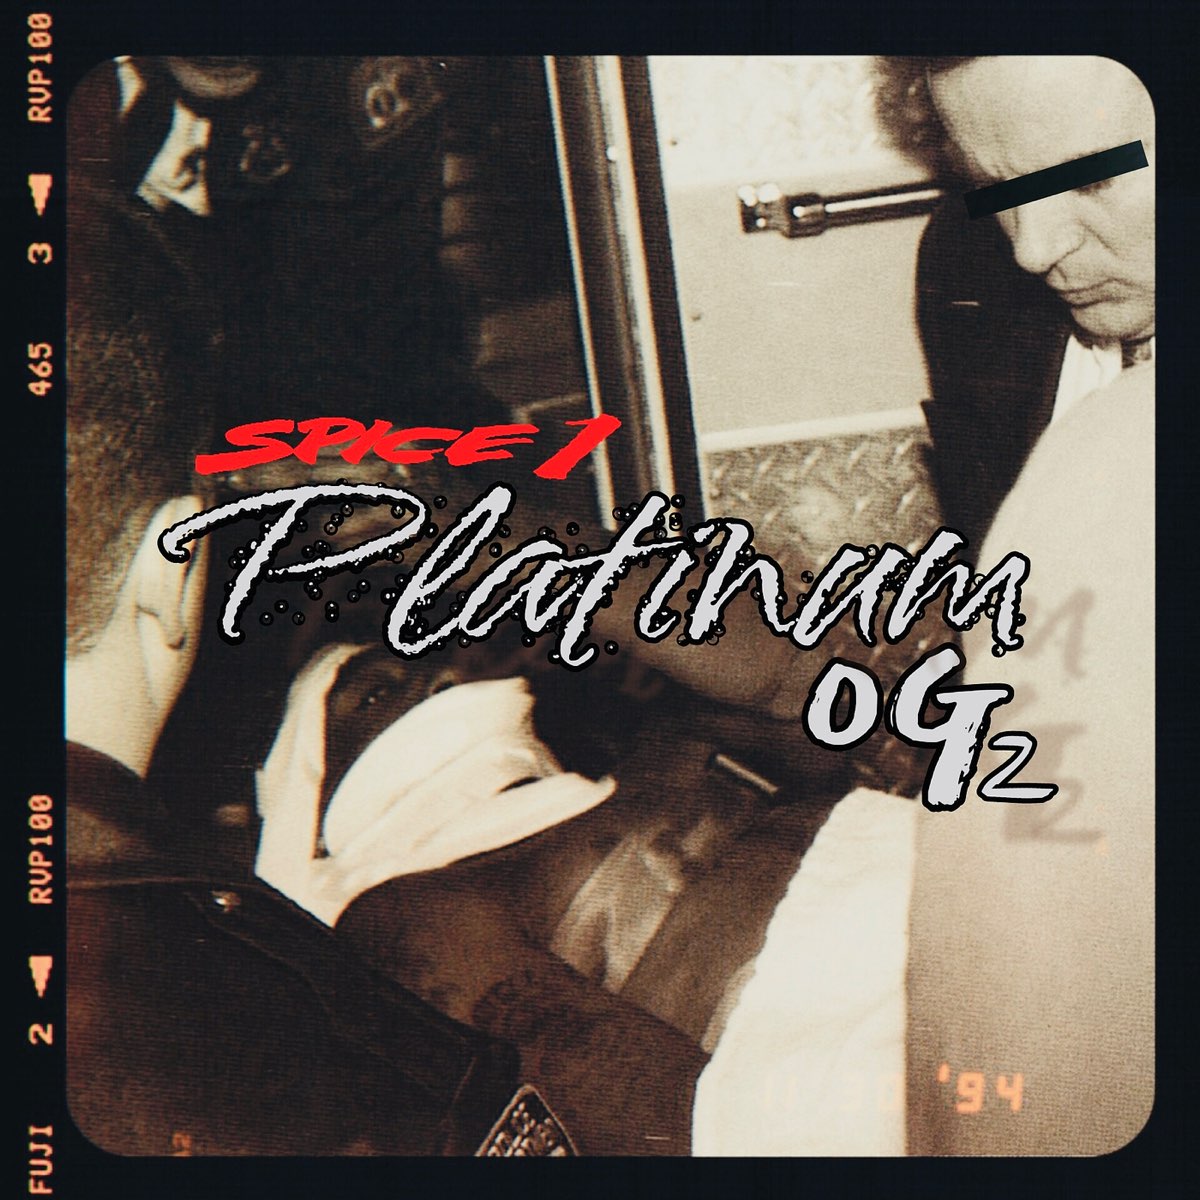 audio review : Platinum OG 2 ( album ) ... Spice 1